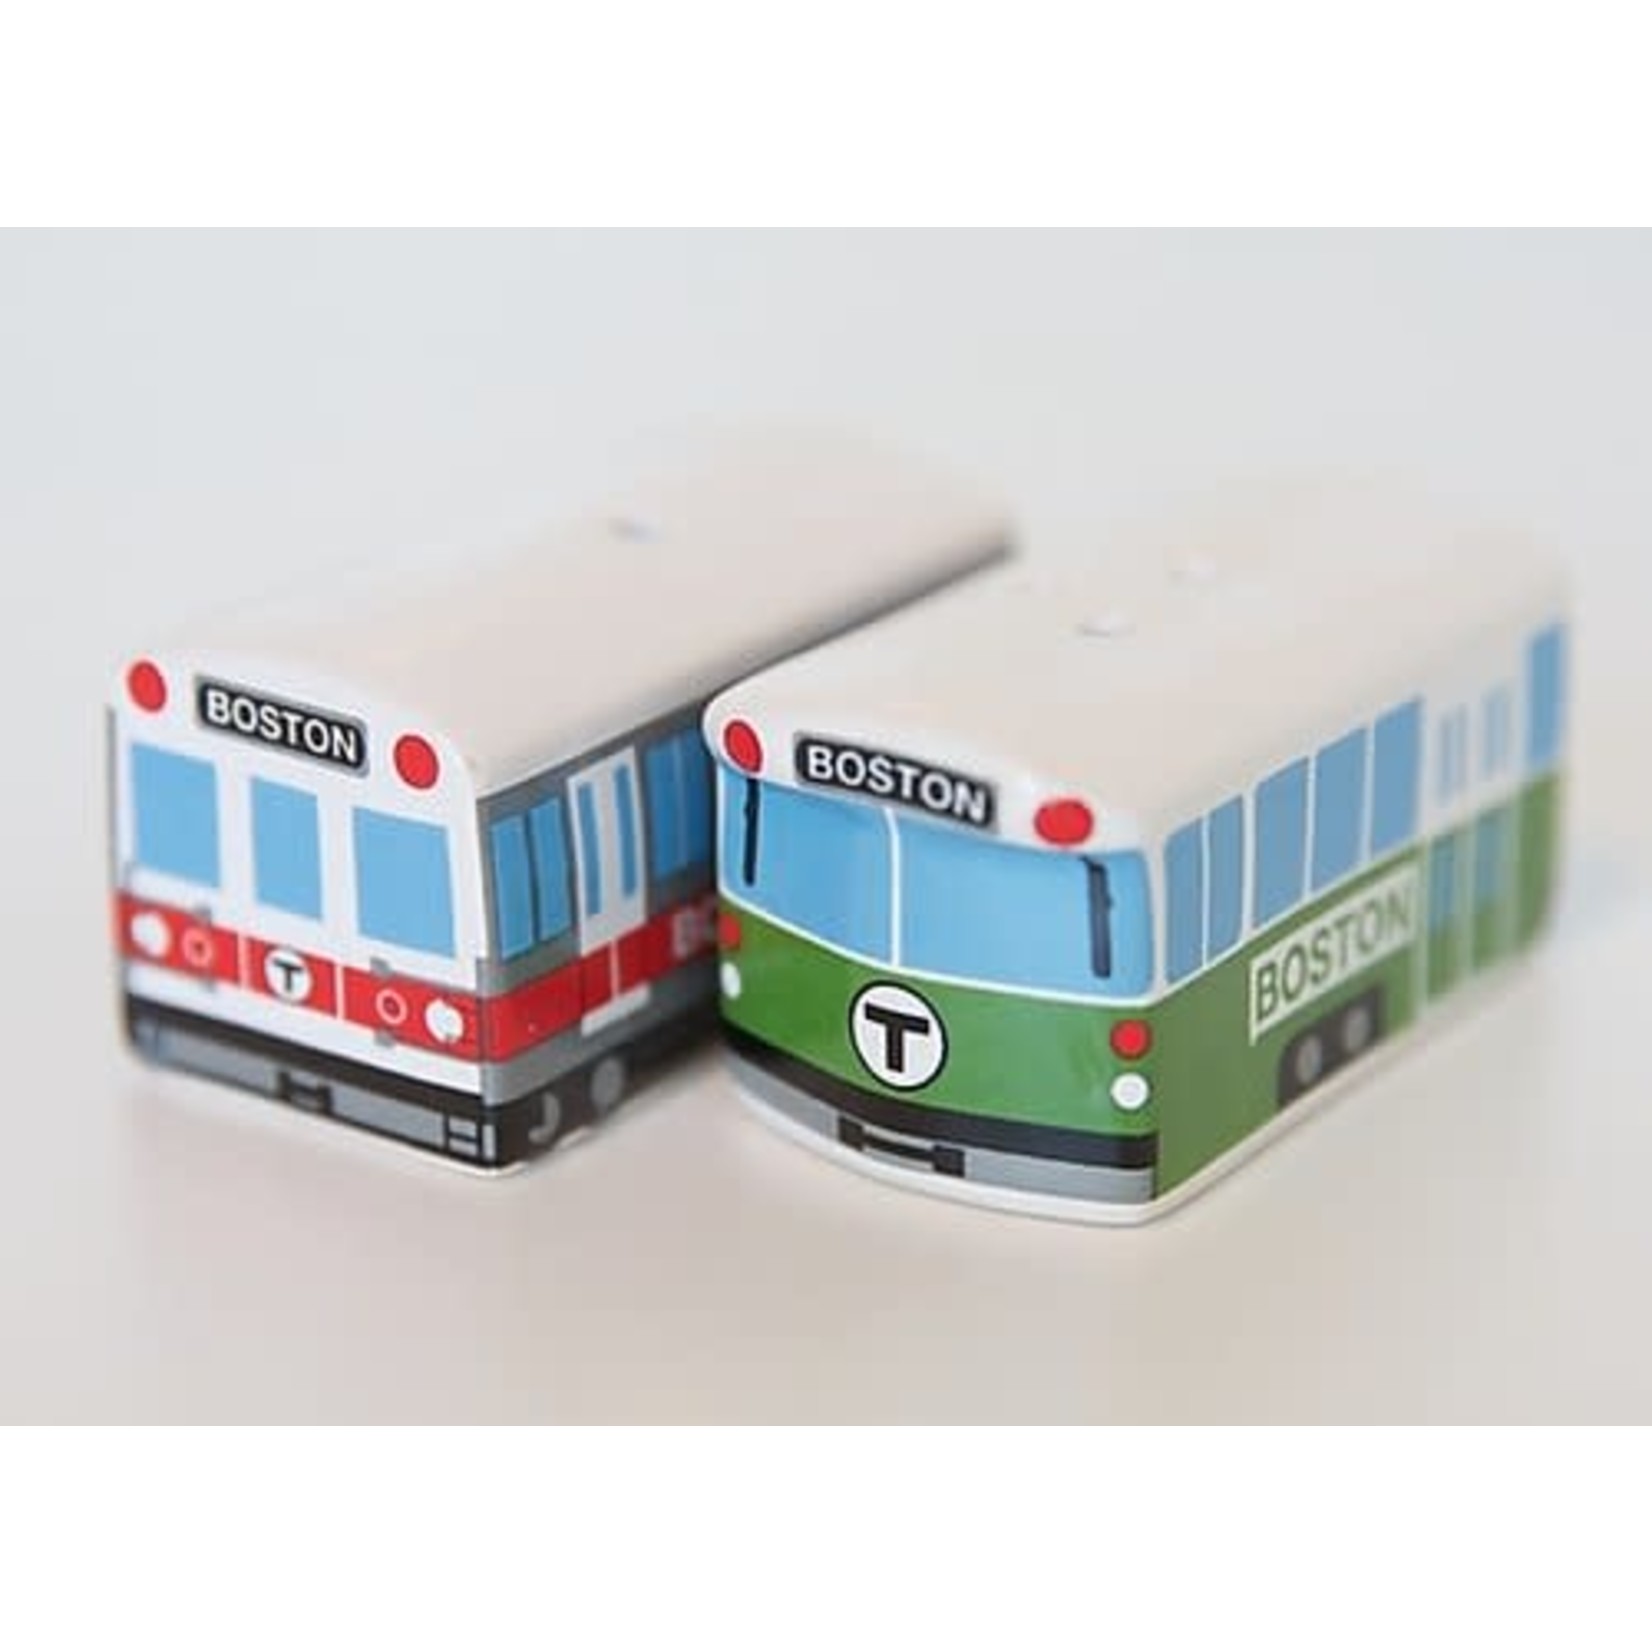 Sidetrack Products MBTA Salt & Pepper Shakers - Boxed Set